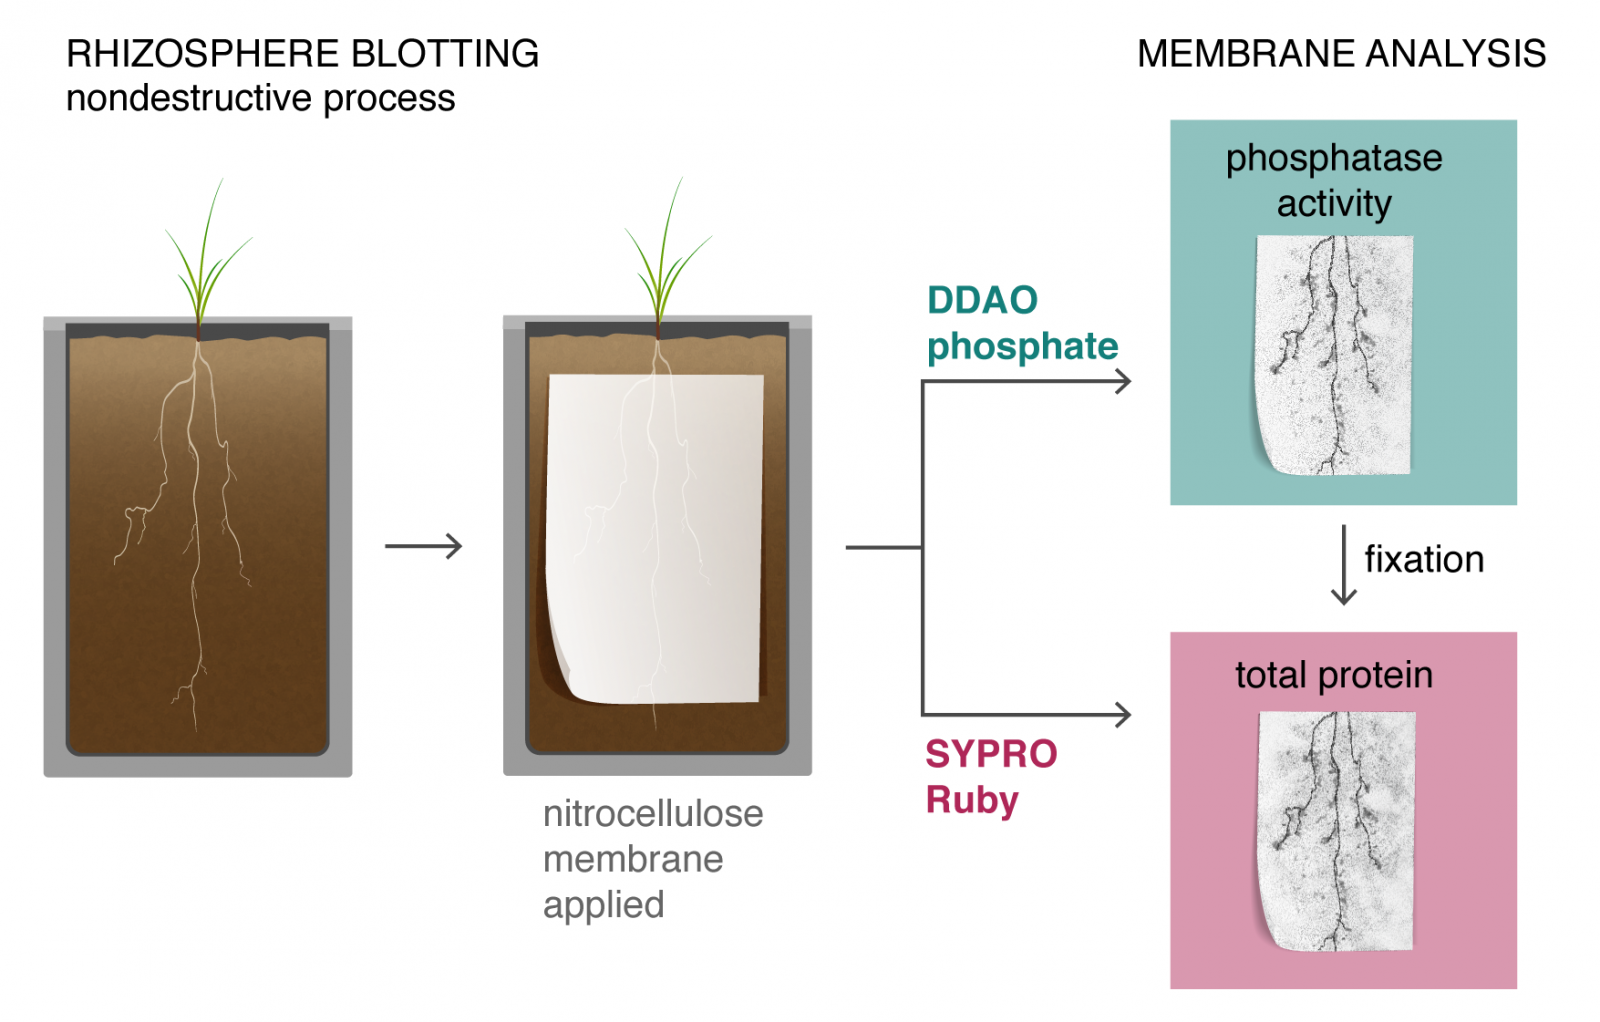 Diagram showing rhizosphere blotting nondestructive process